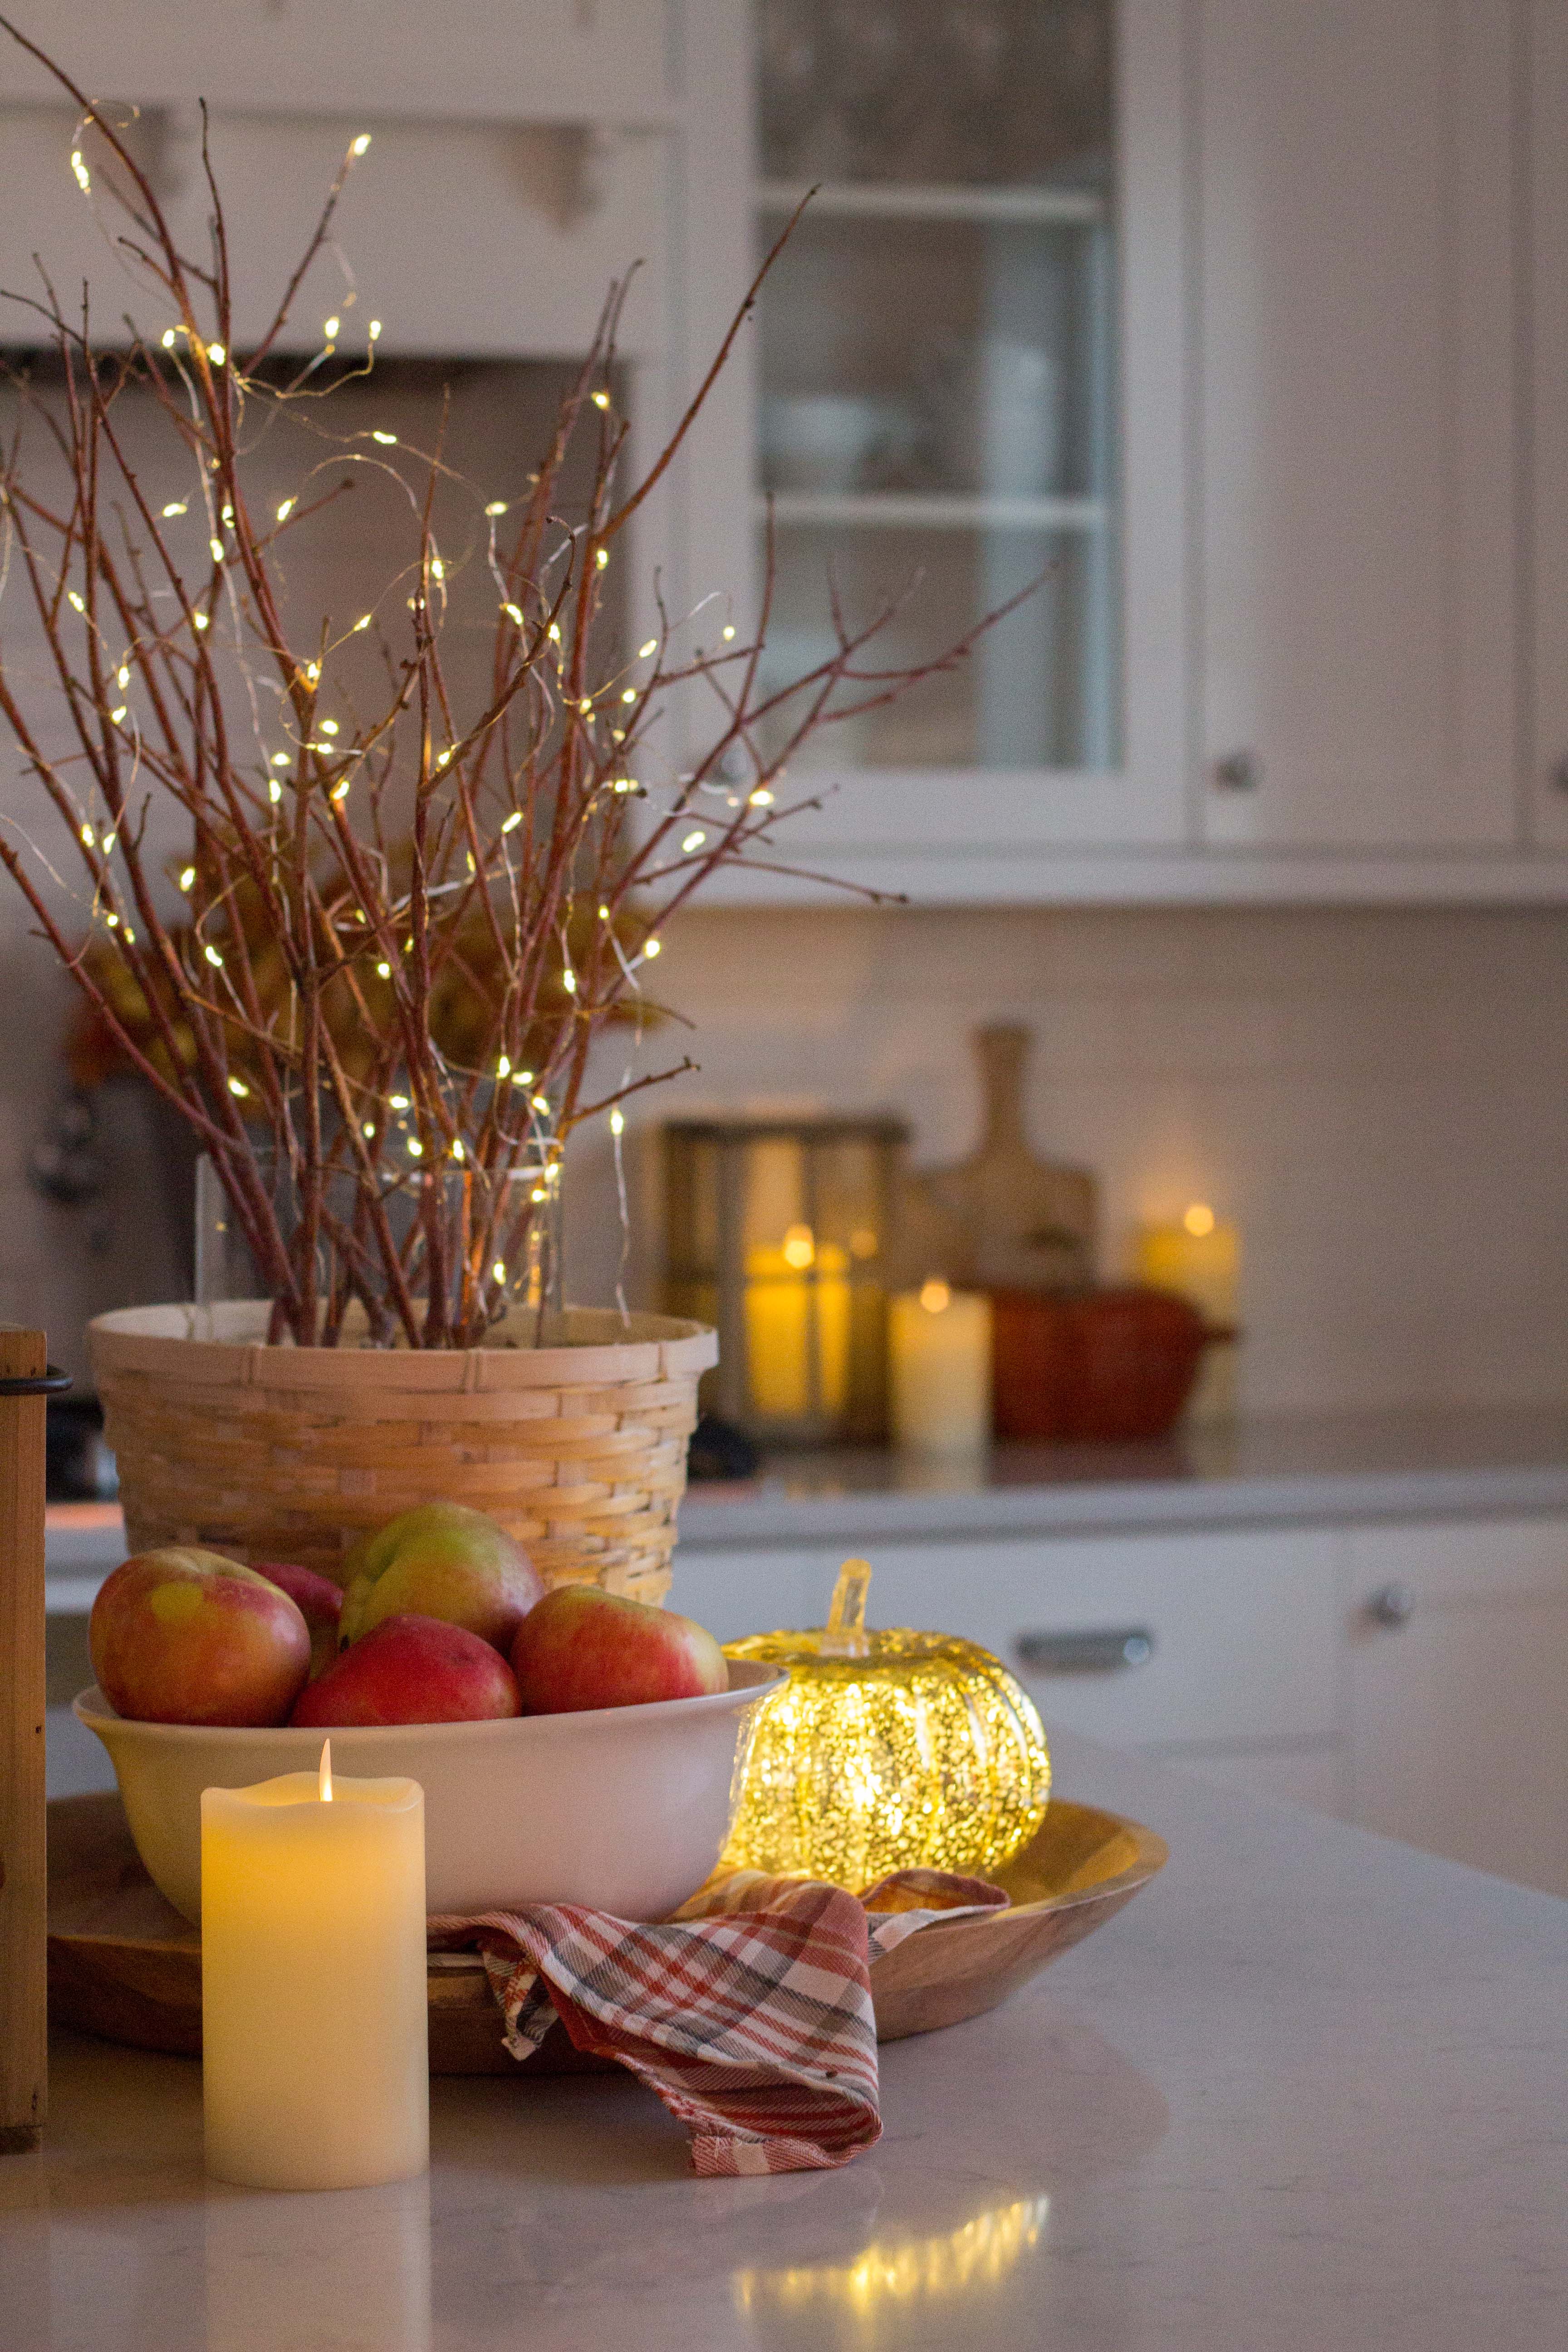 Cozy Autumn Candlelight Kitchen Décor